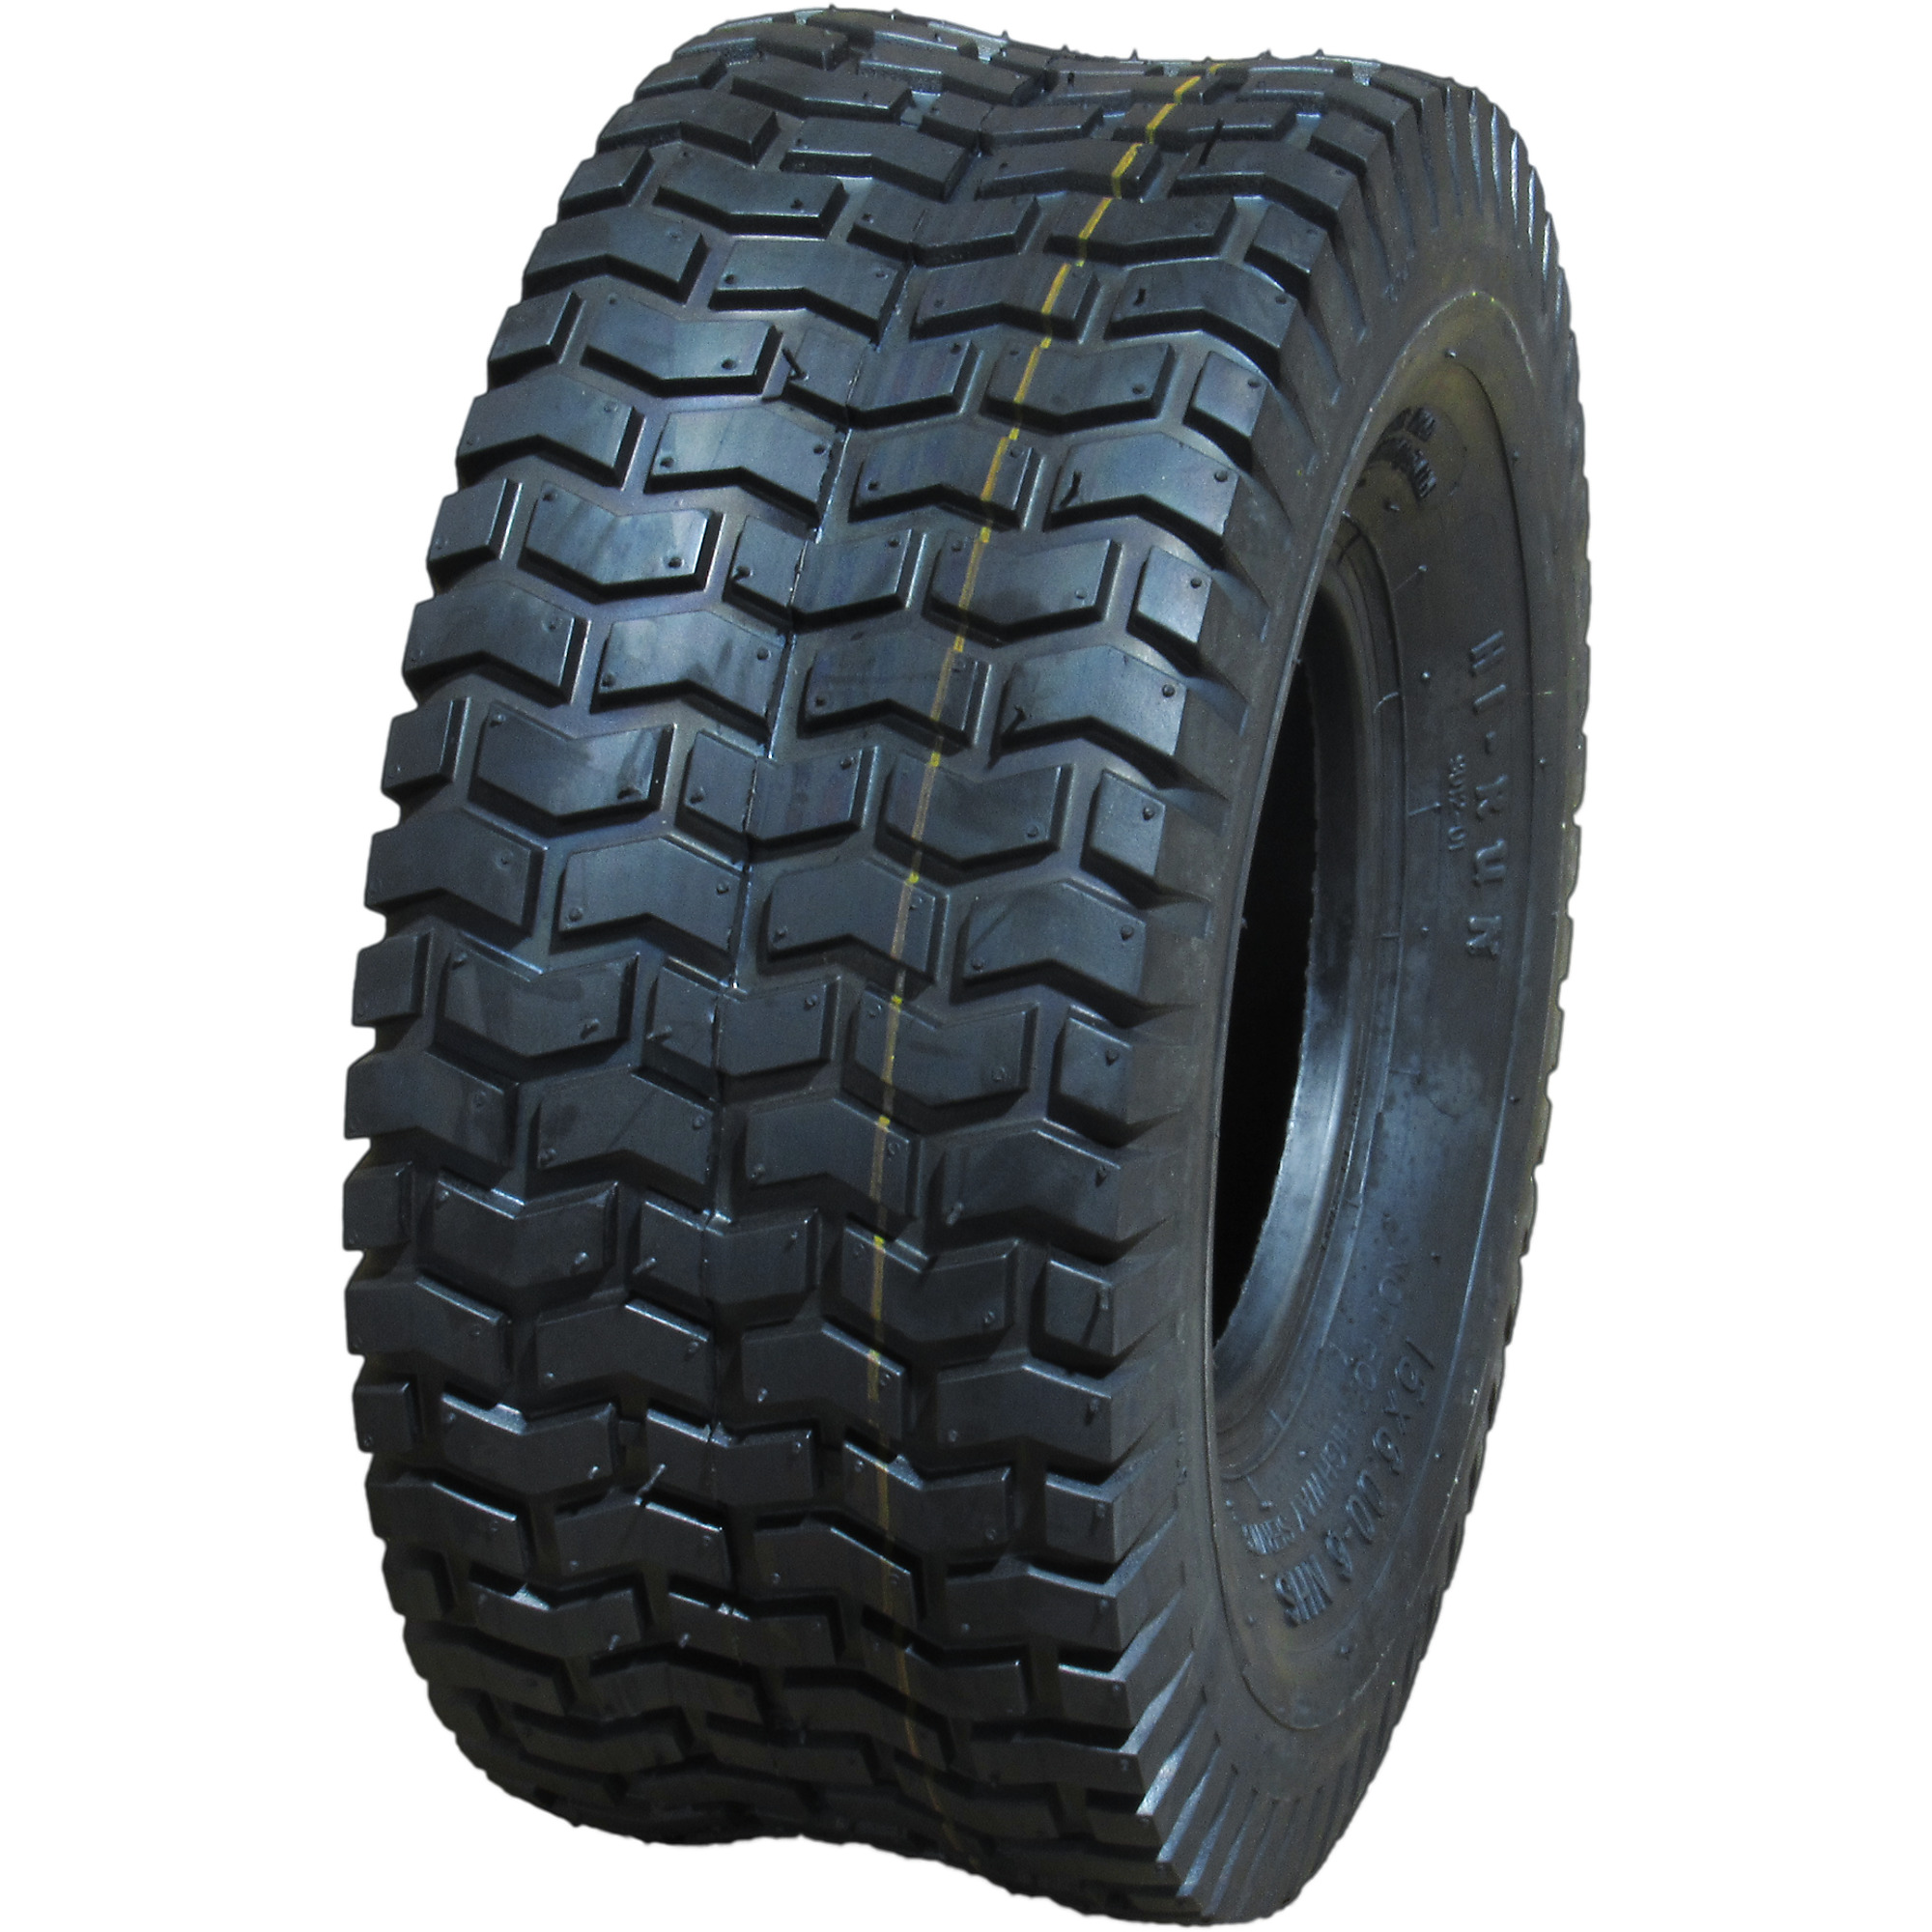 HI-RUN, Lawn Garden Tire, SU12 Turf II, Tire Size 4.80-8 Load Range Rating A, Model WD1278